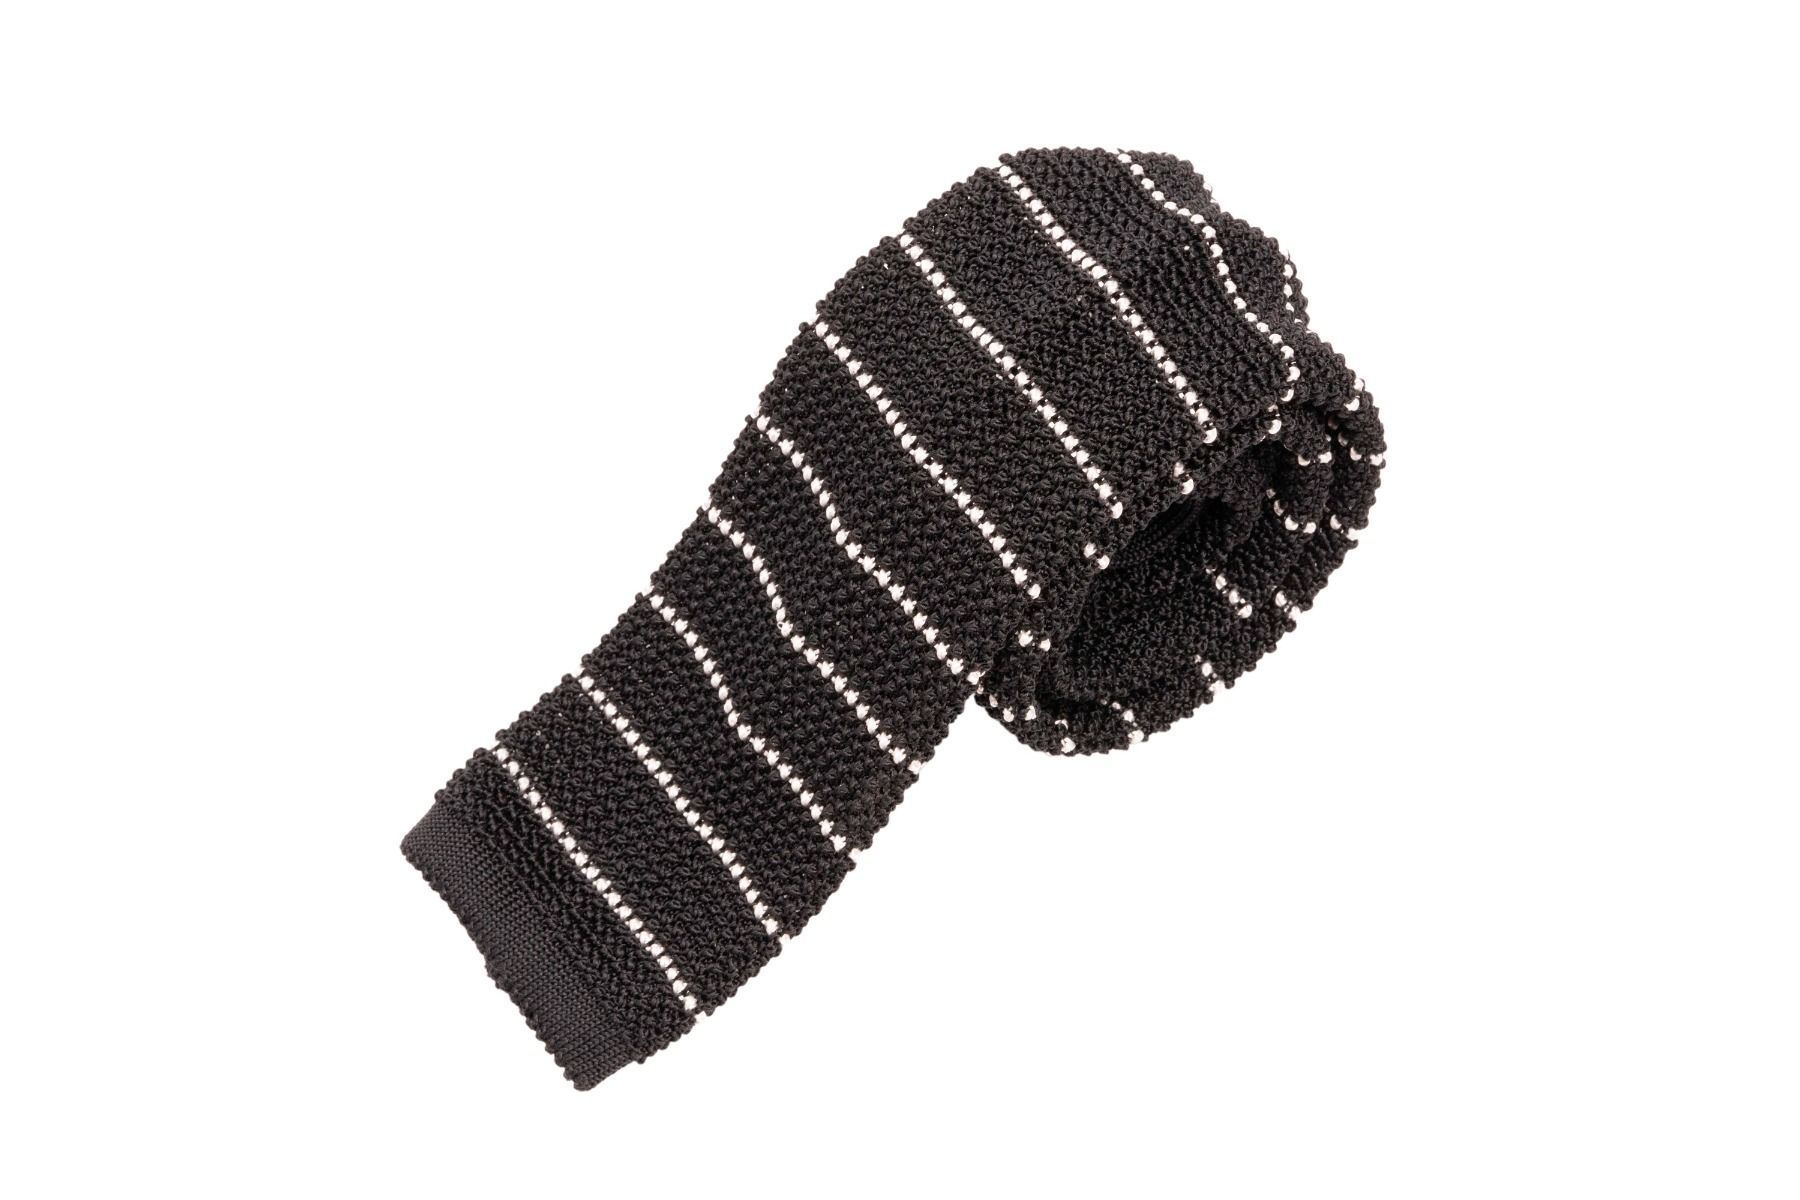 Striped Tie Silk Knit Tie Black & Grey Striped Silk Knitted Tie